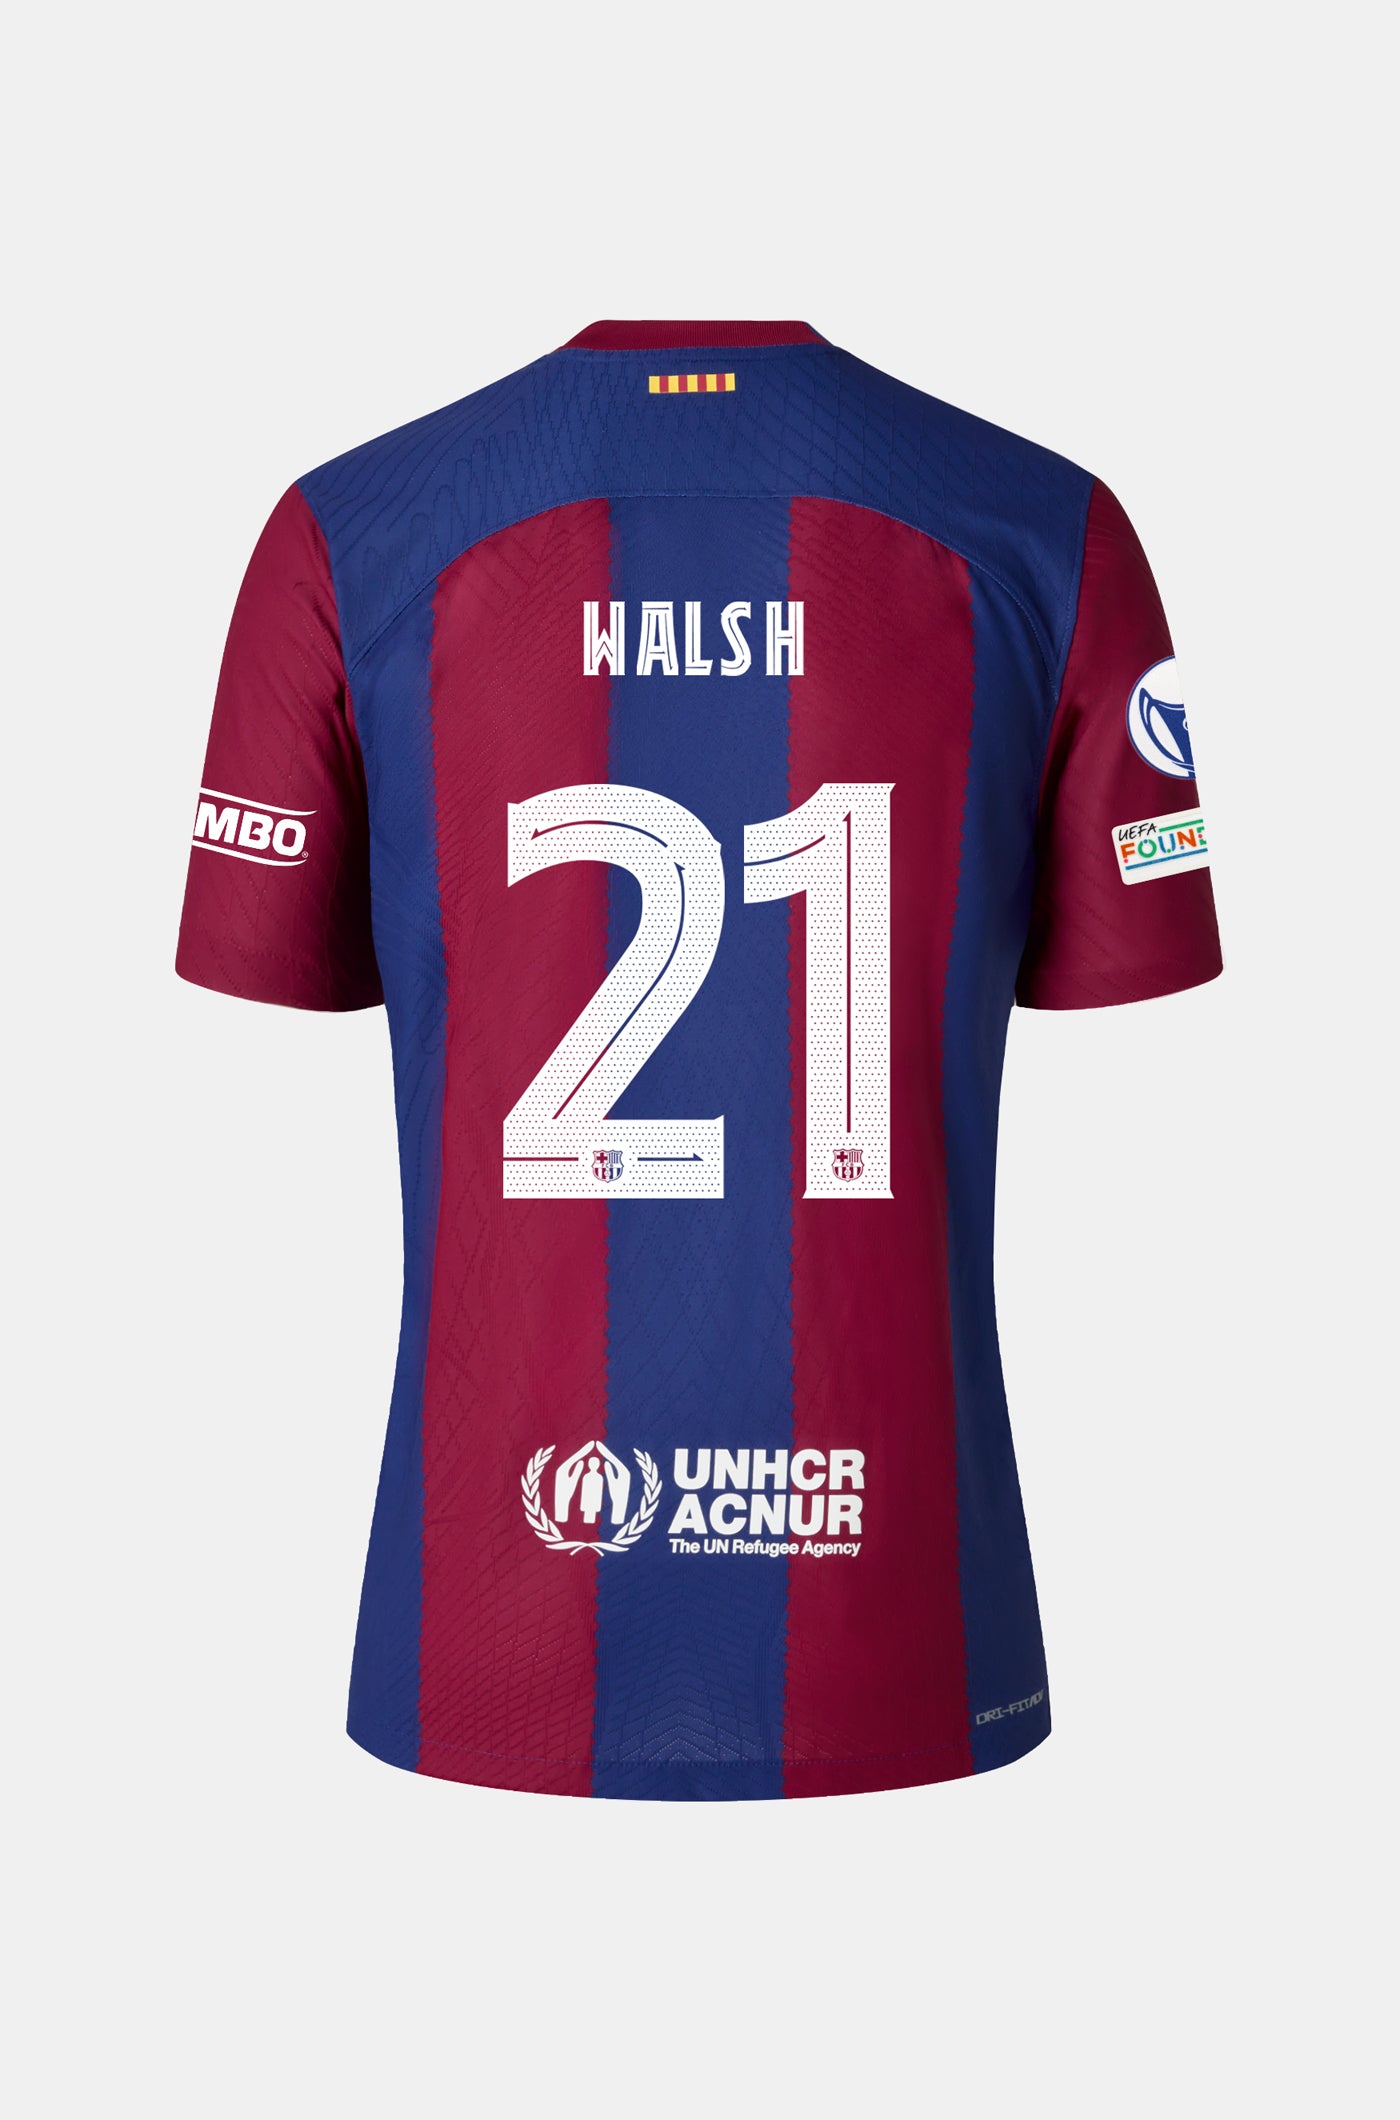 UWCL FC Barcelona Home Shirt 23/24 Player's Edition - Women - WALSH